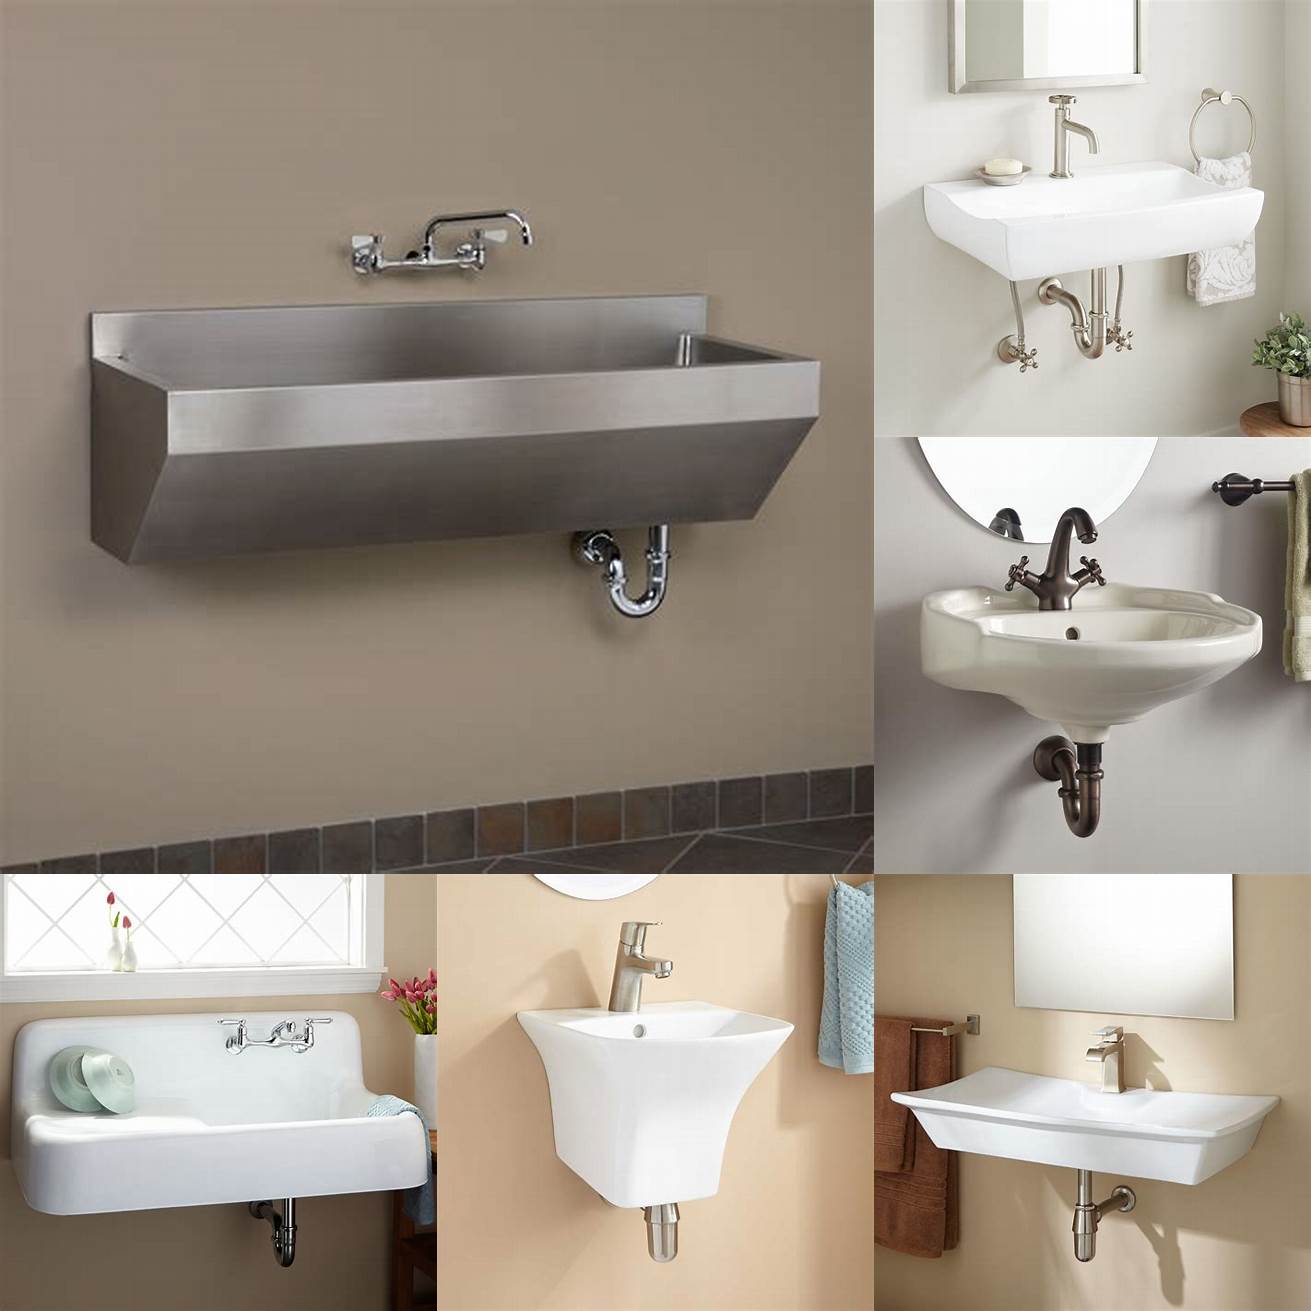 Wall-mounted sink